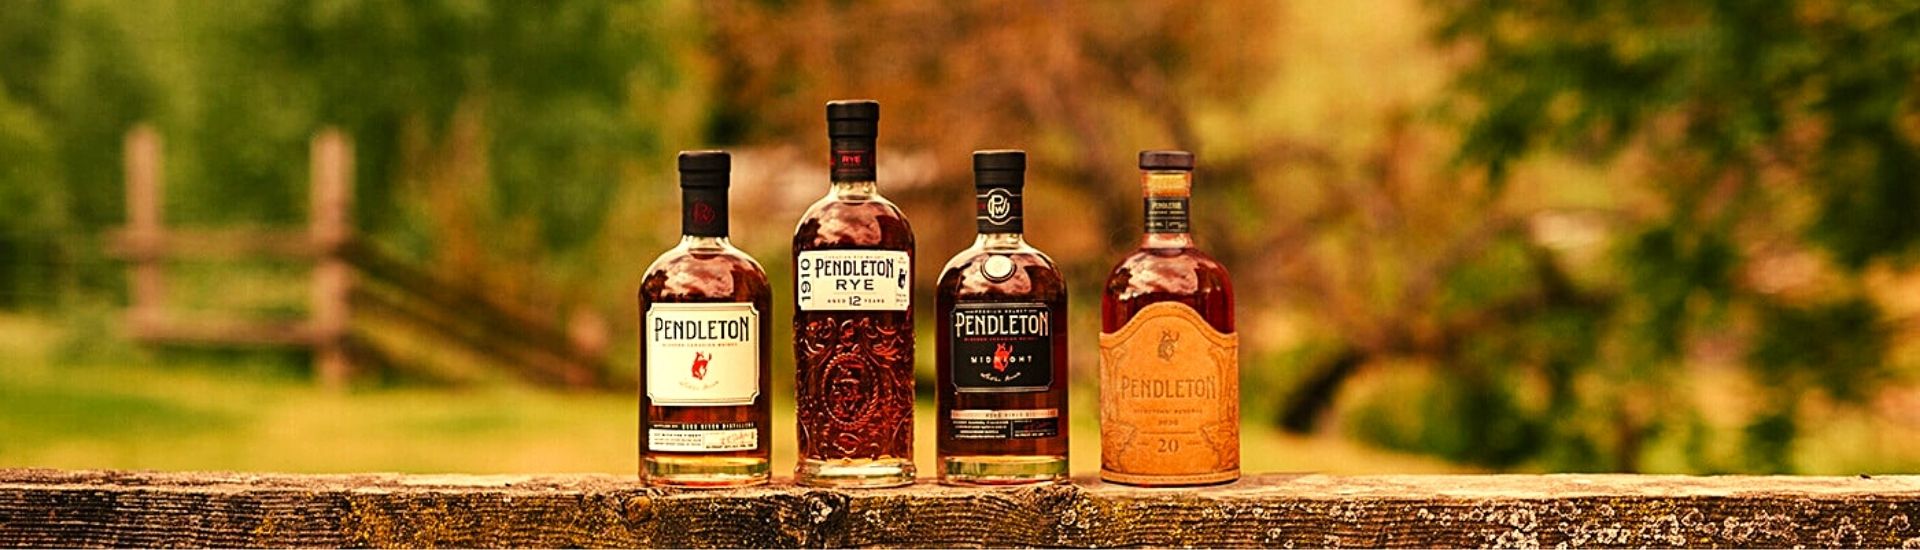 pendleton whiskey bottles